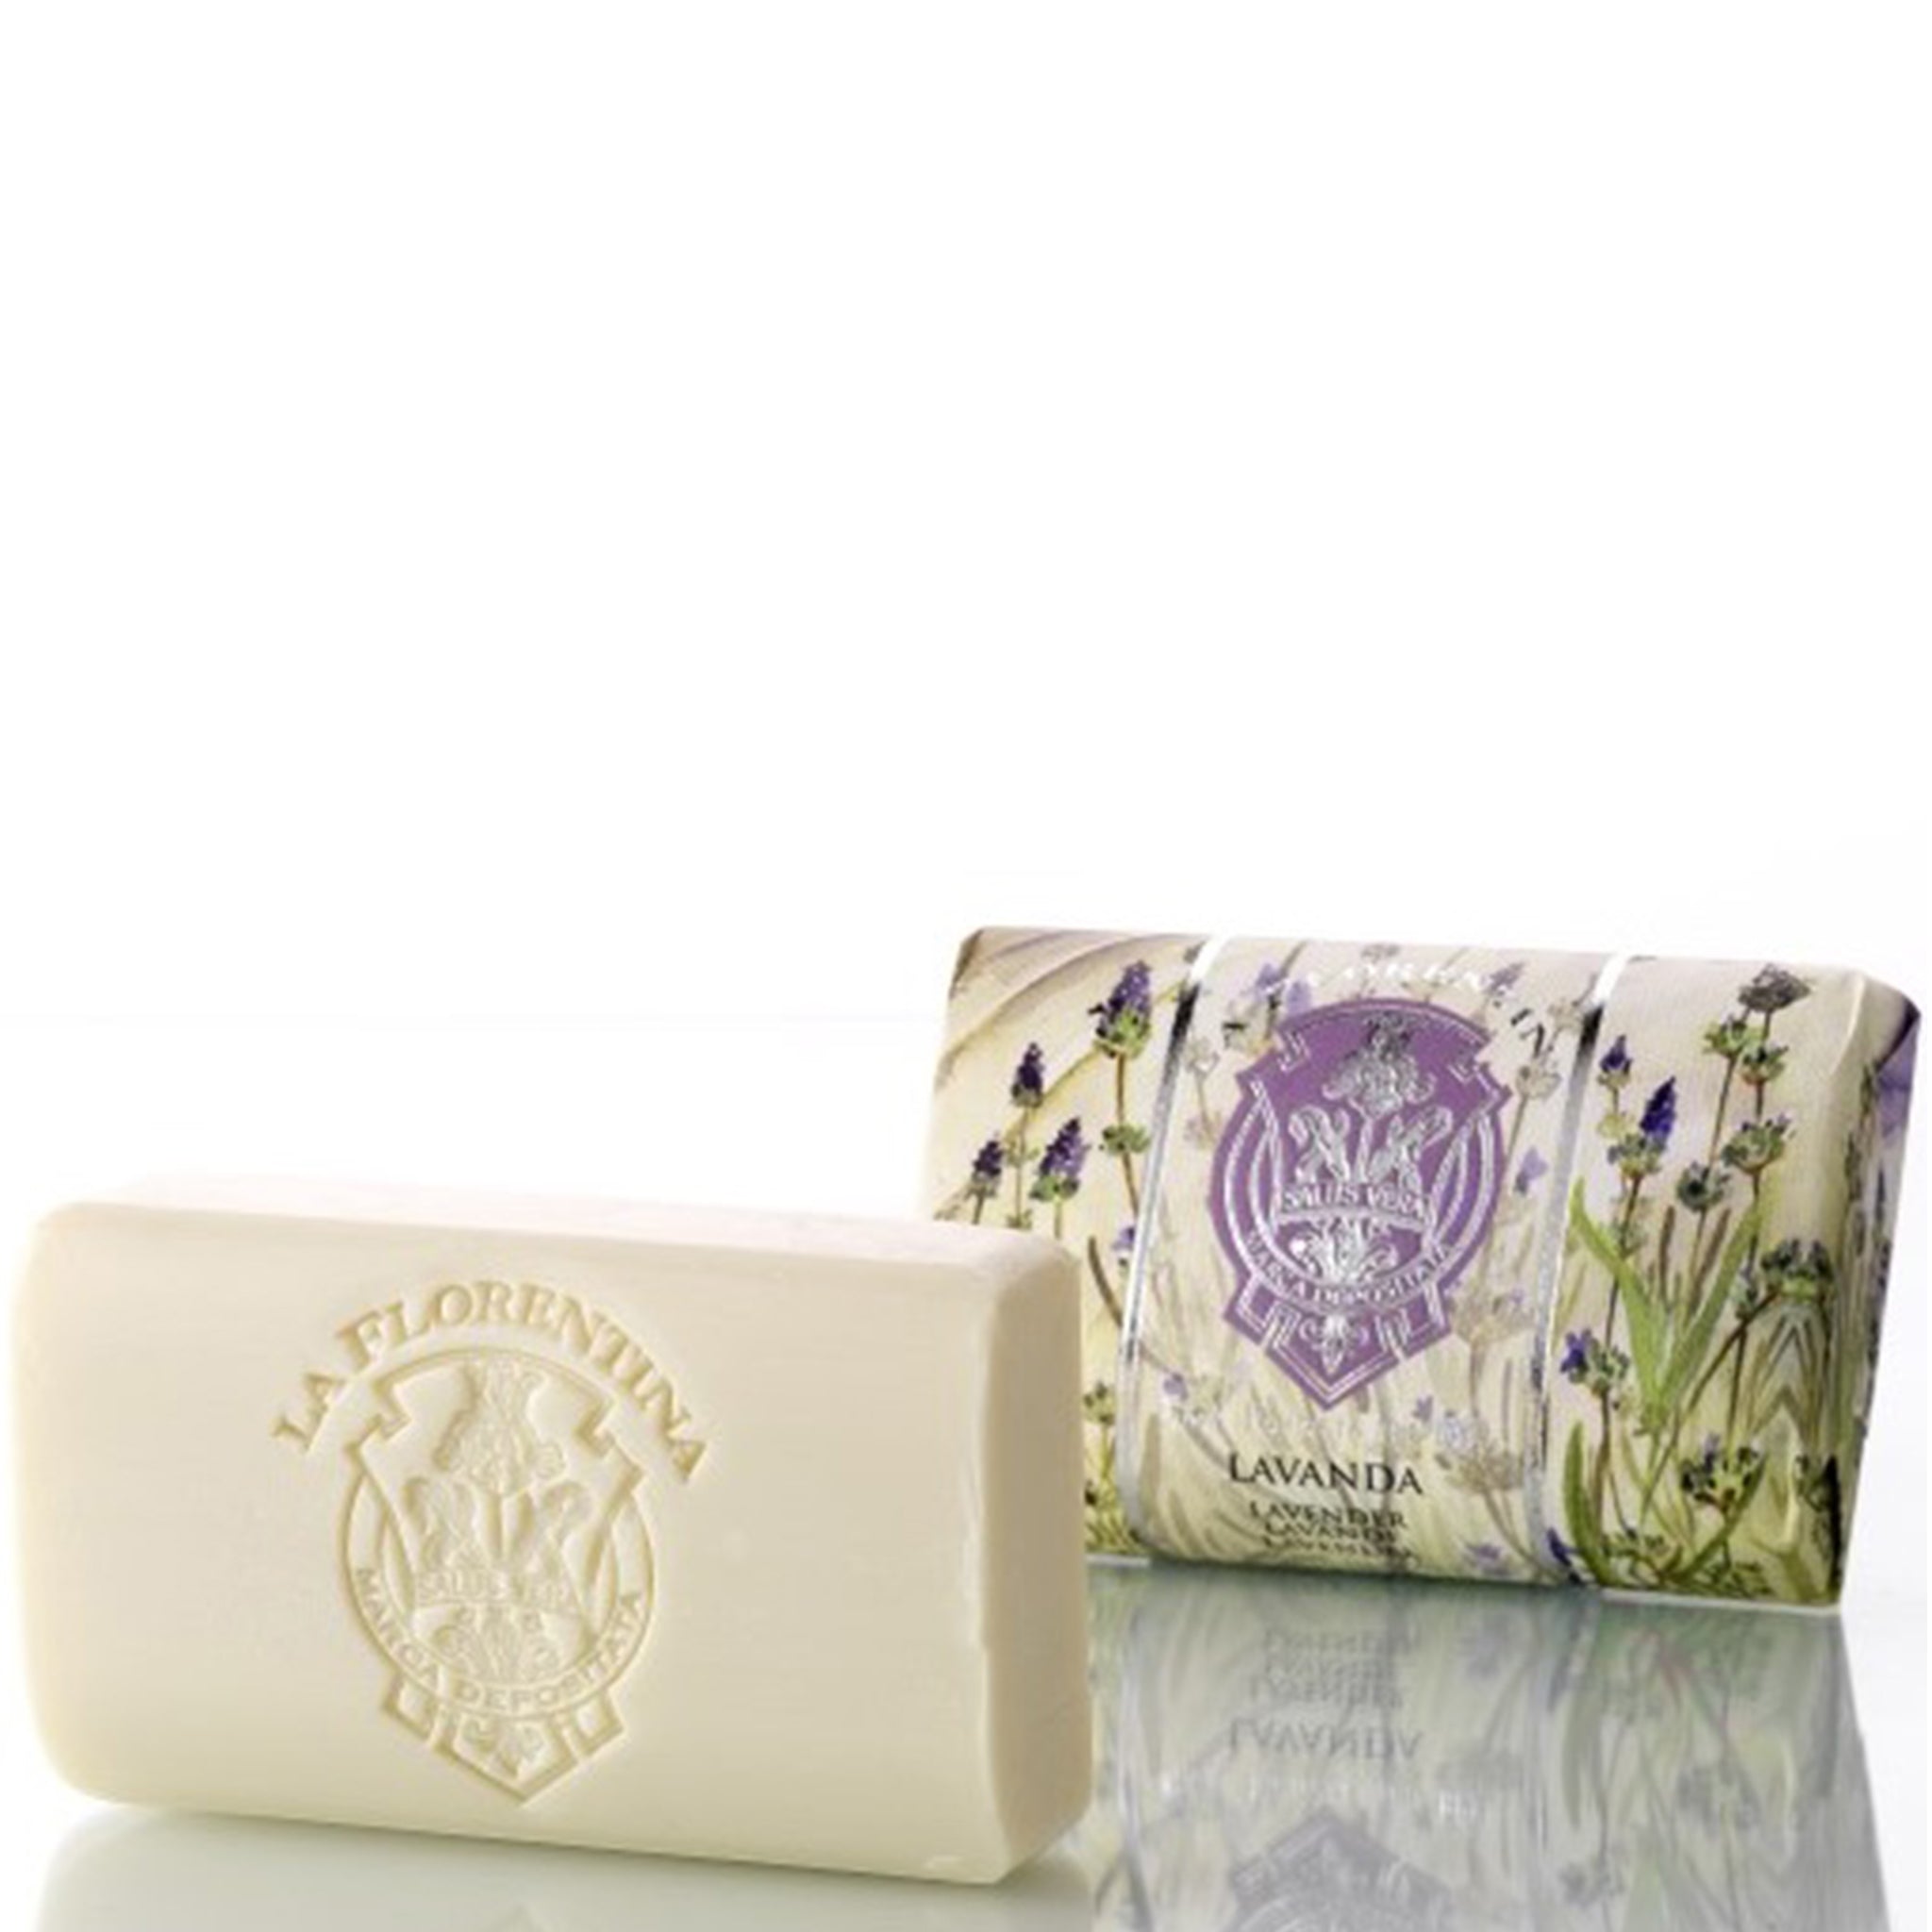 La Florentina Lavender 200g Bar Soap